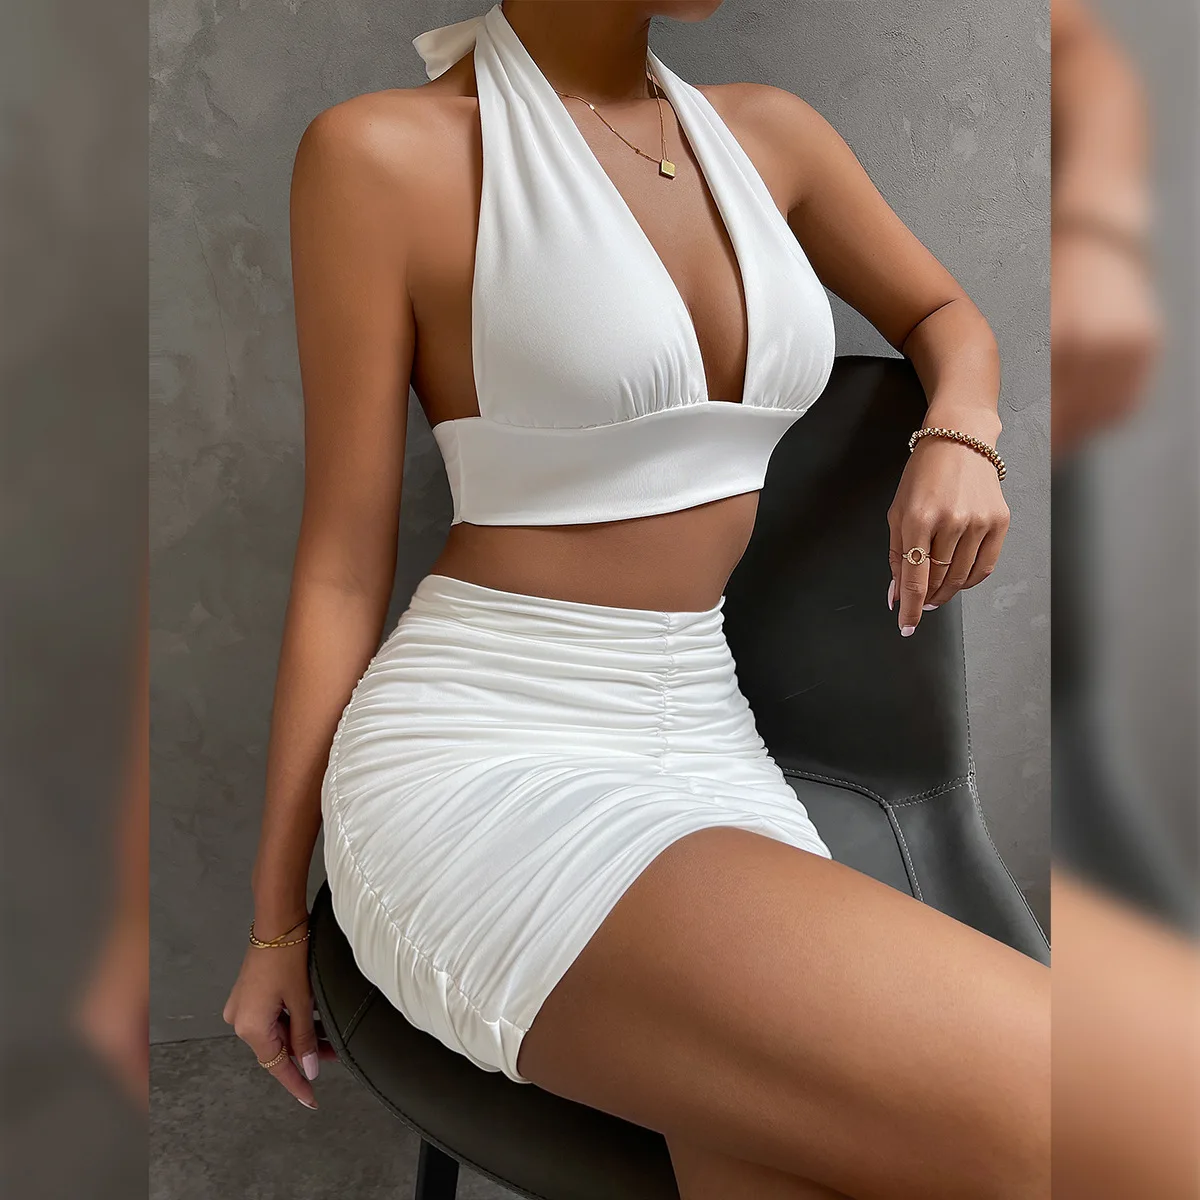 KOLLSEEY Brand 2022 New Arrival Sexy Women Tie Back Cutout Backless Party Club Mini Bodycon Dress enlarge